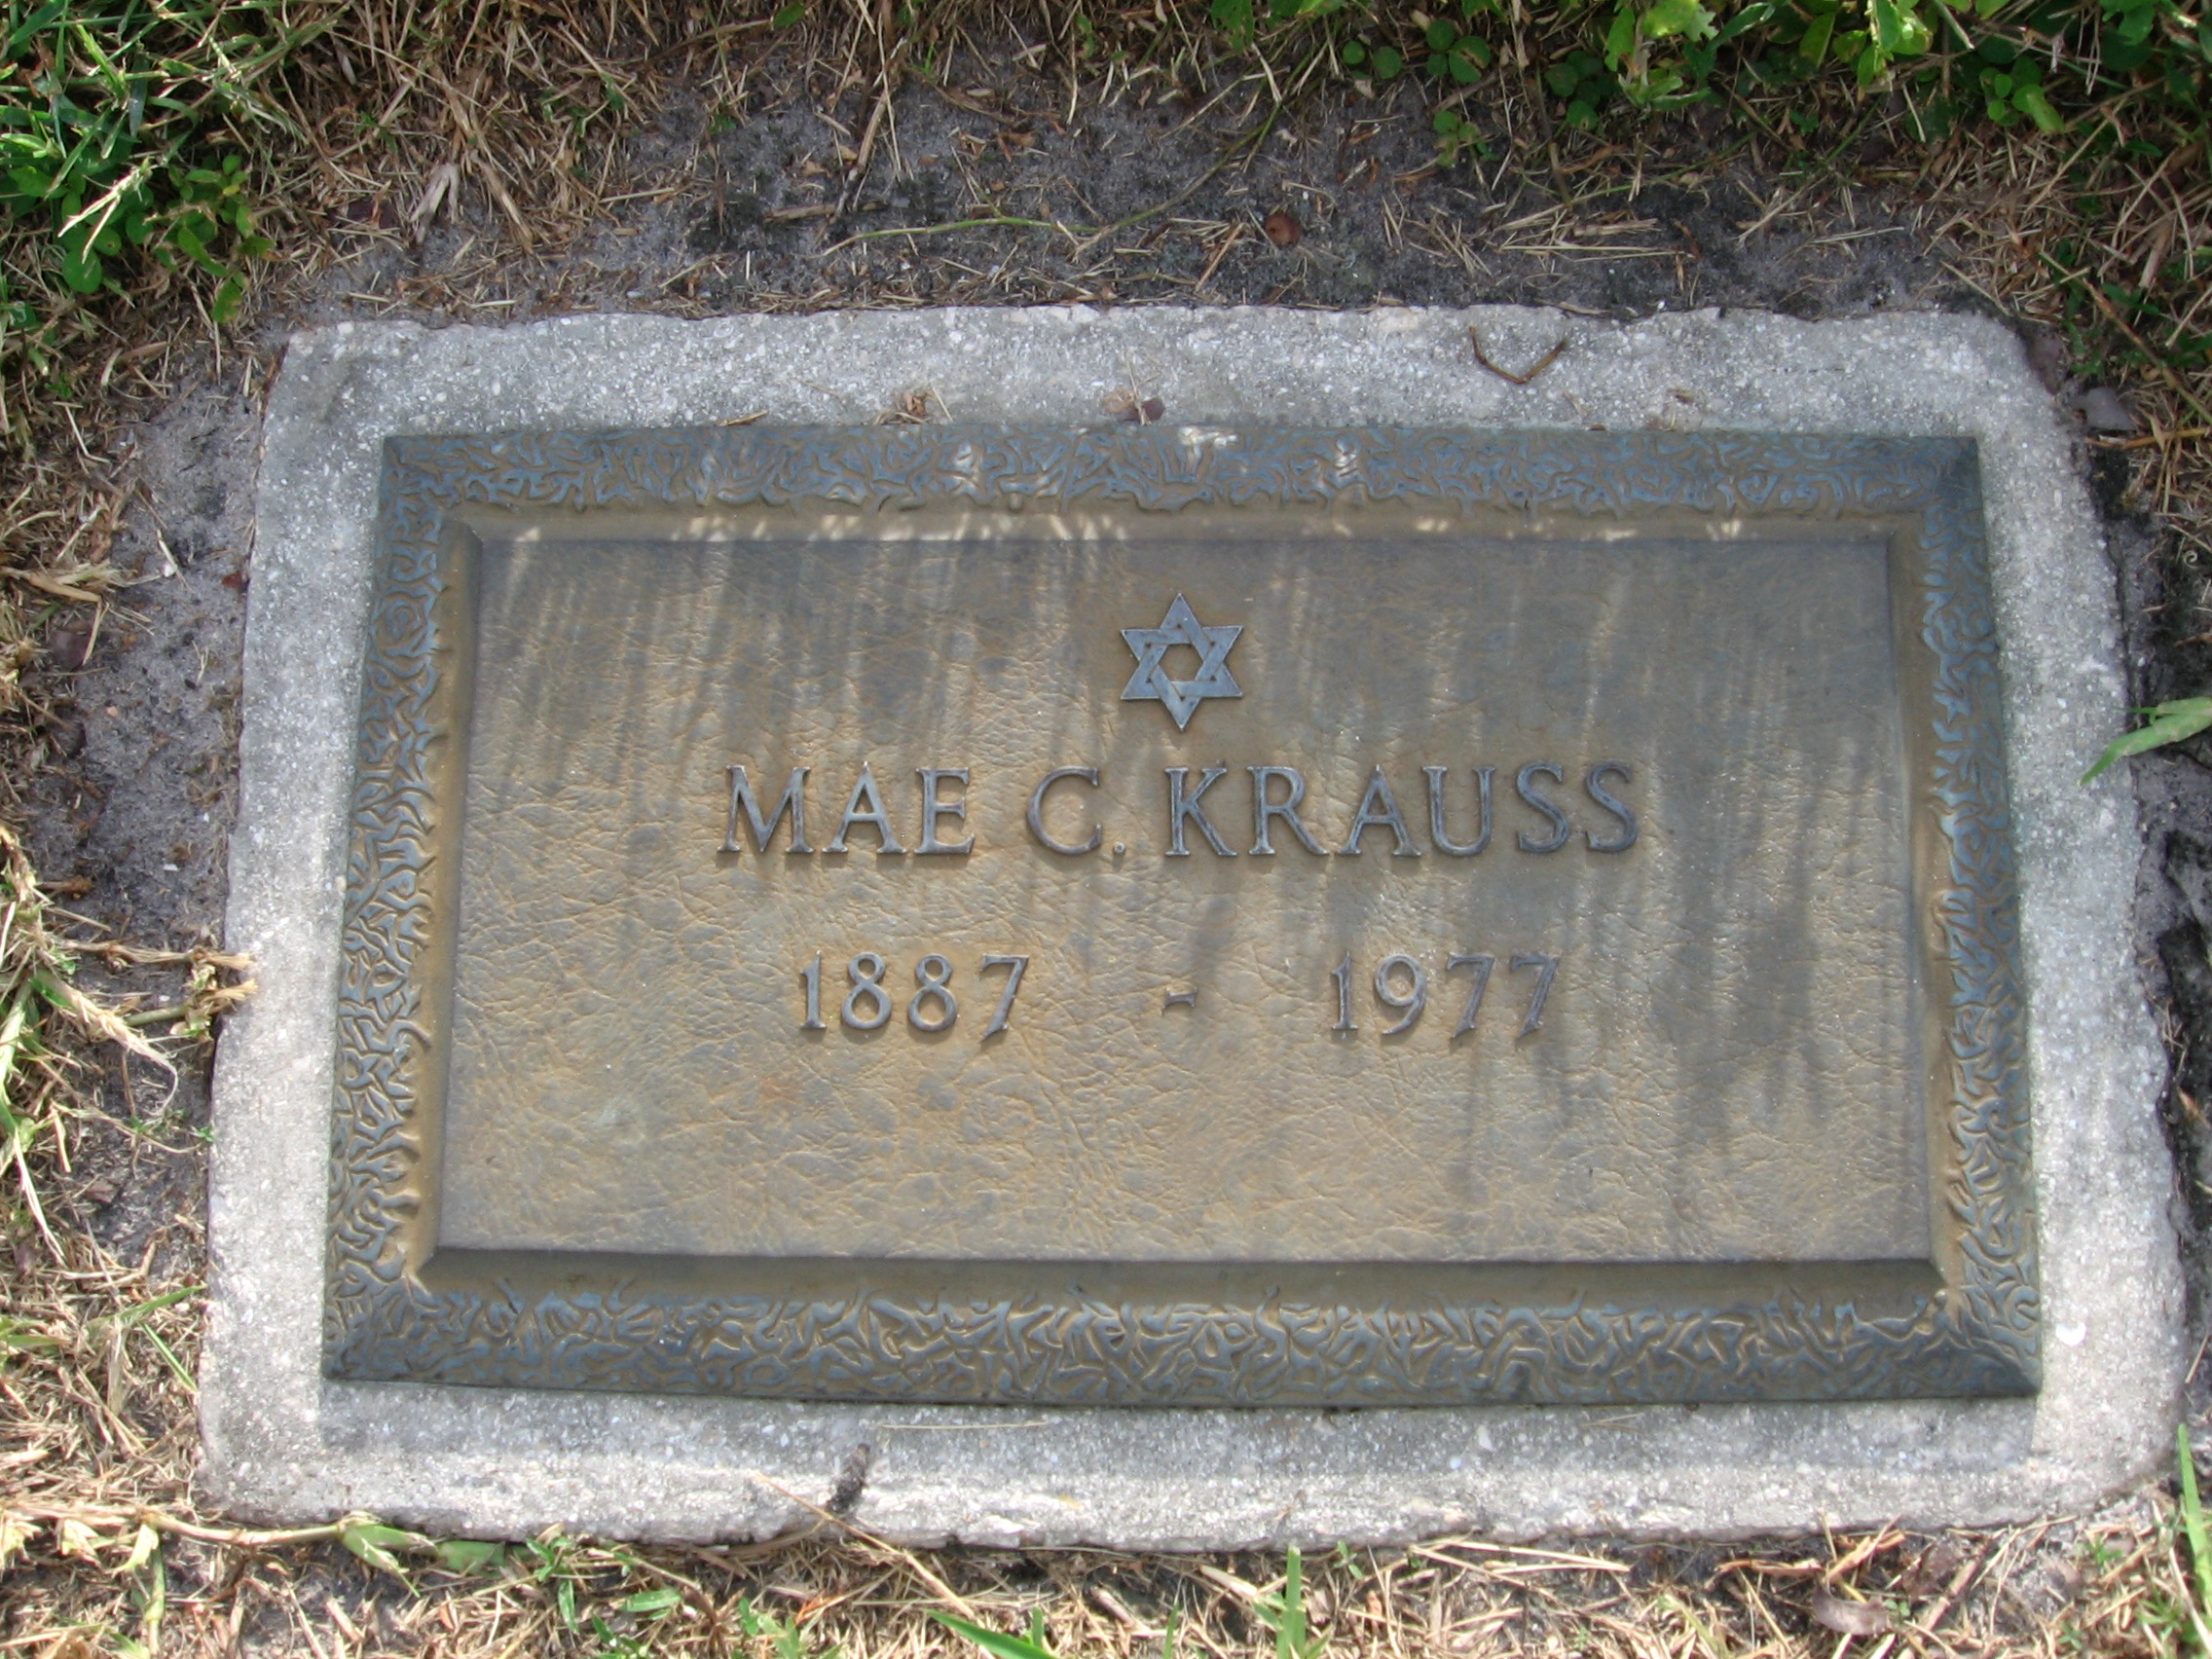 Mae G Krauss